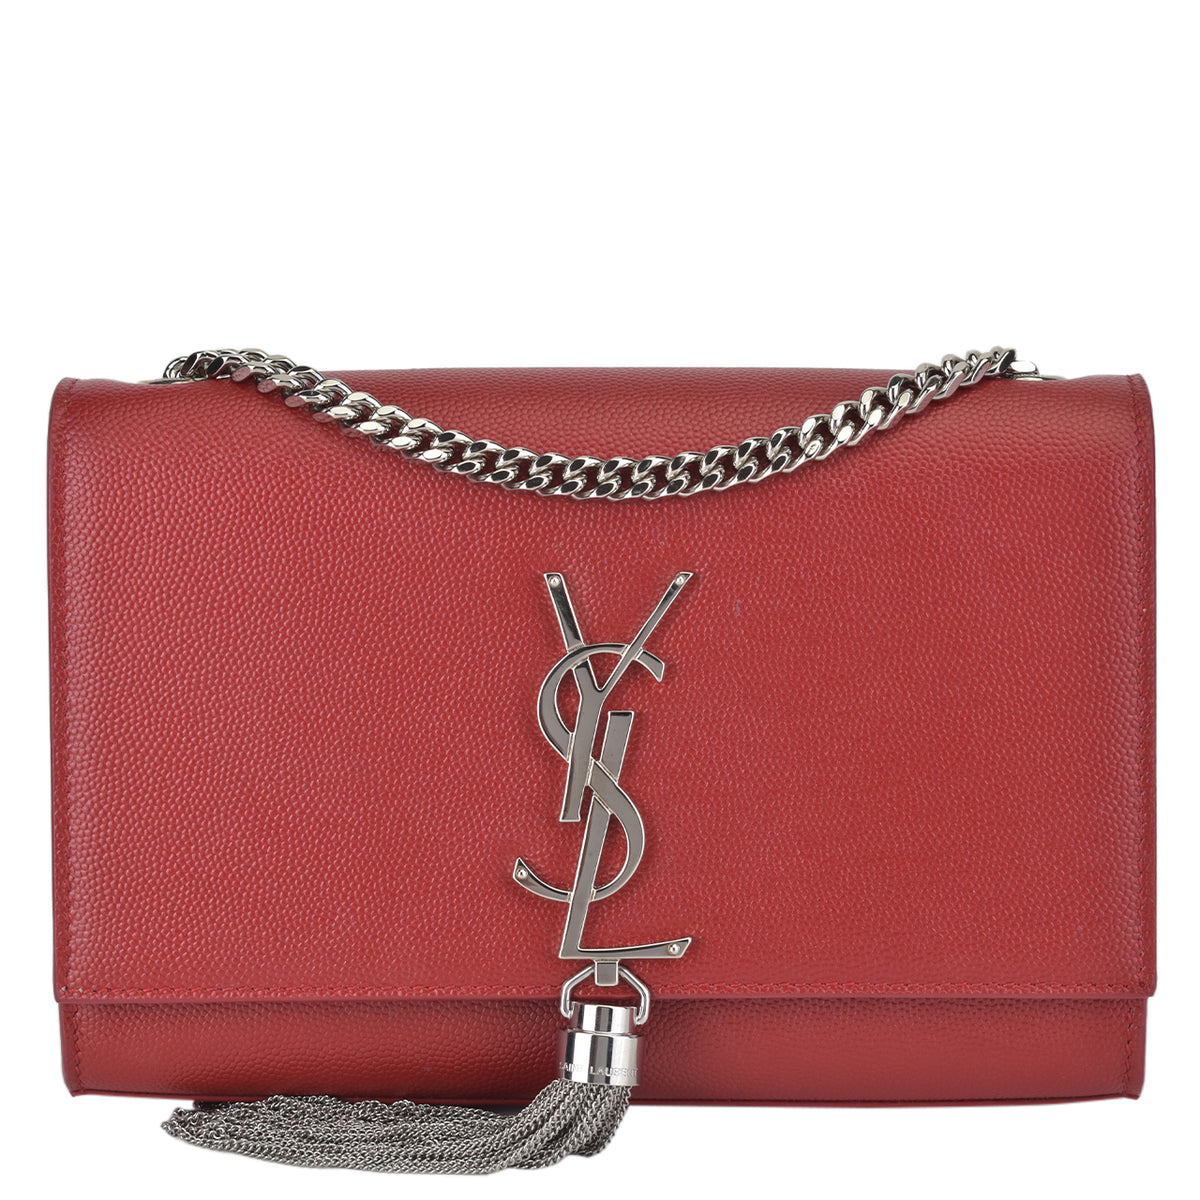 YVES SAINT LAURENT Small Kate Tassel Leather Crossbody Bag Teal - 15%